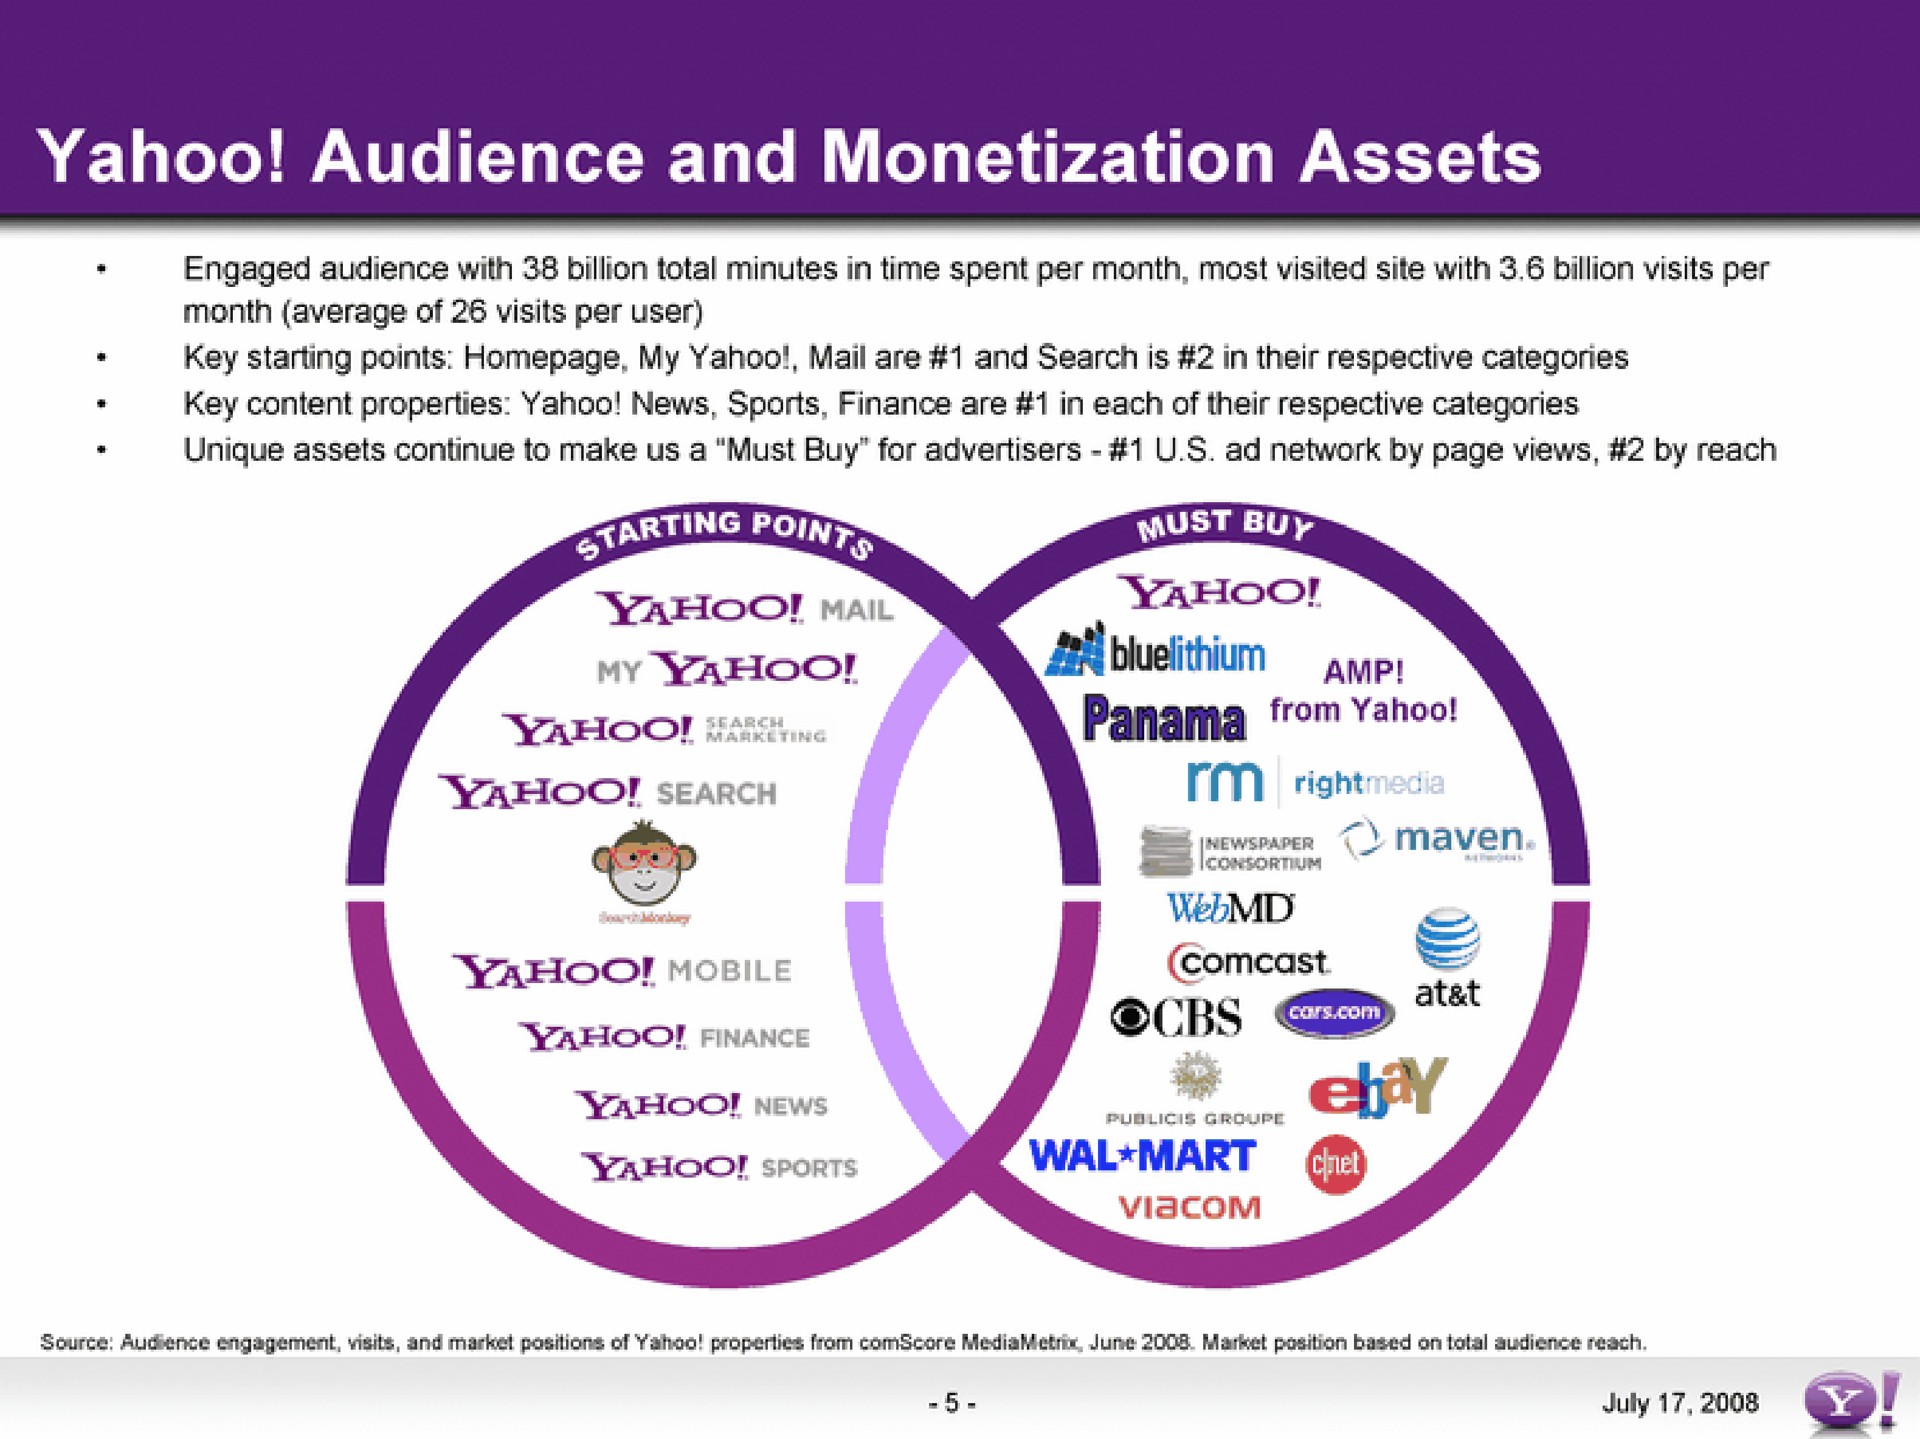 yahoo audience and monetization assets | Yahoo